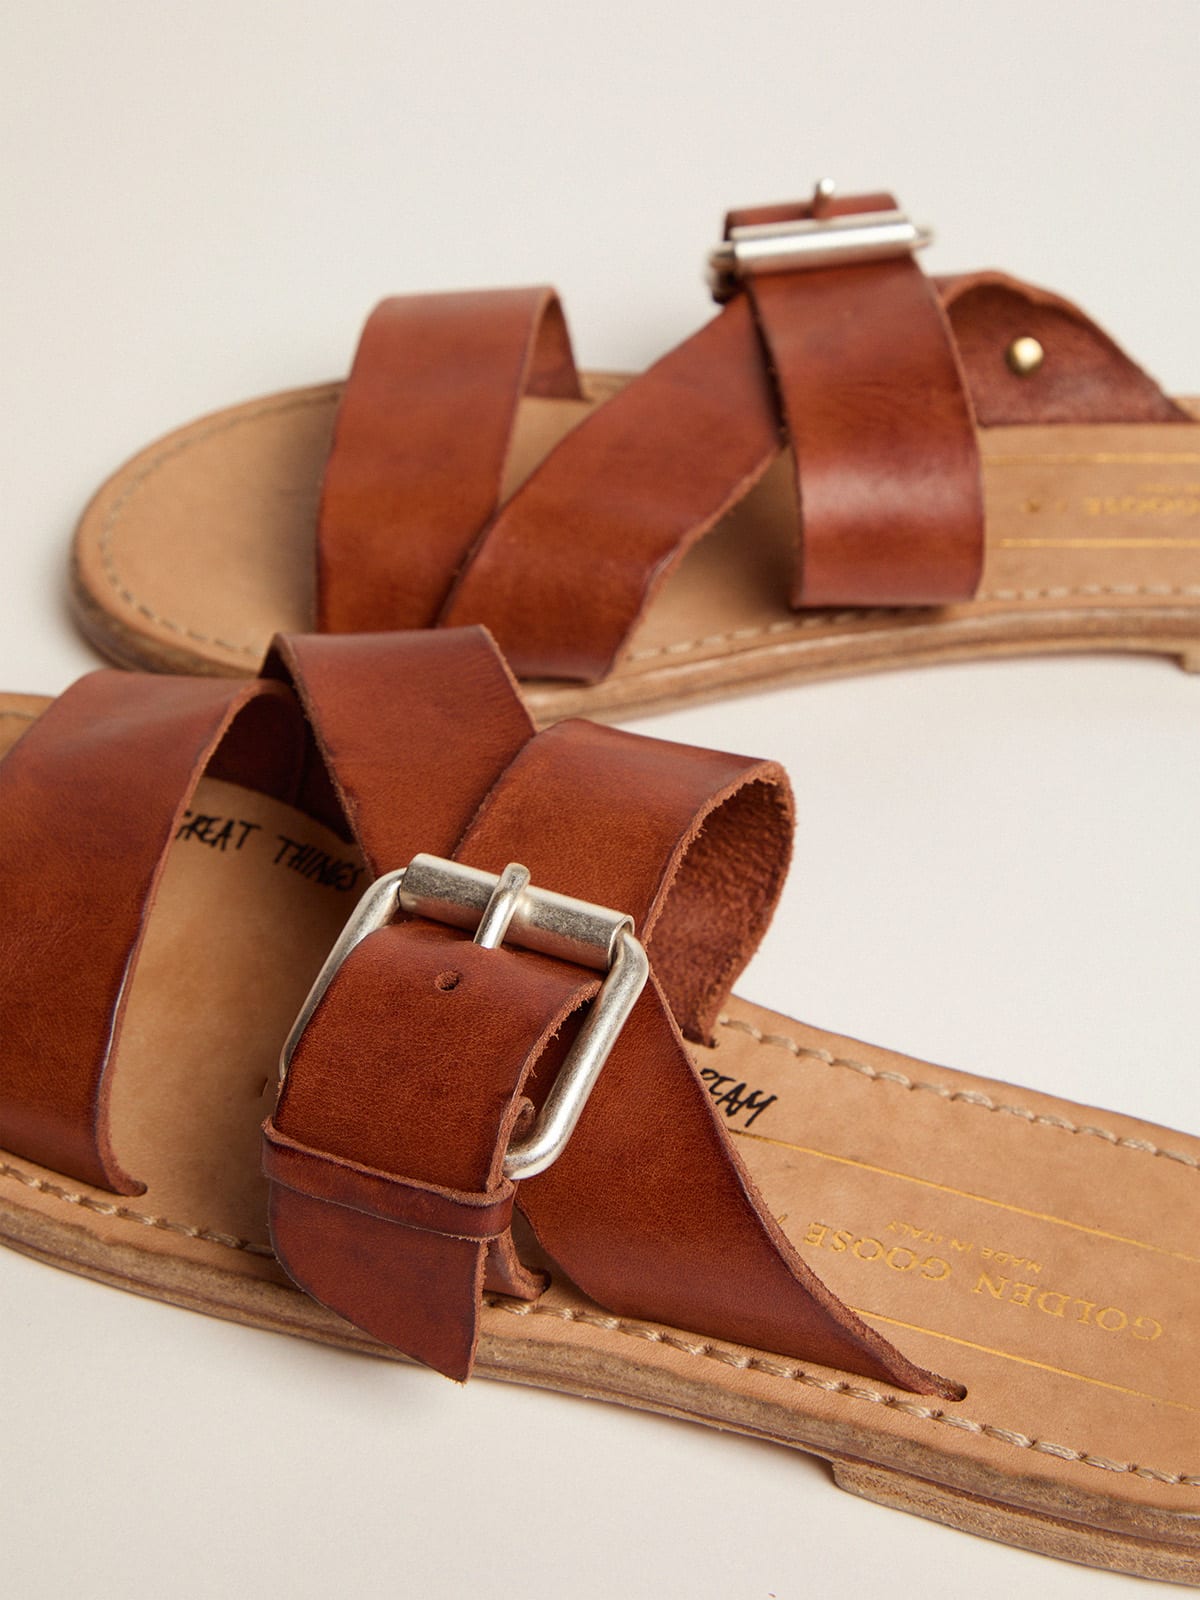 Golden Goose - Margaret flat sandals in resin-coated leather in 